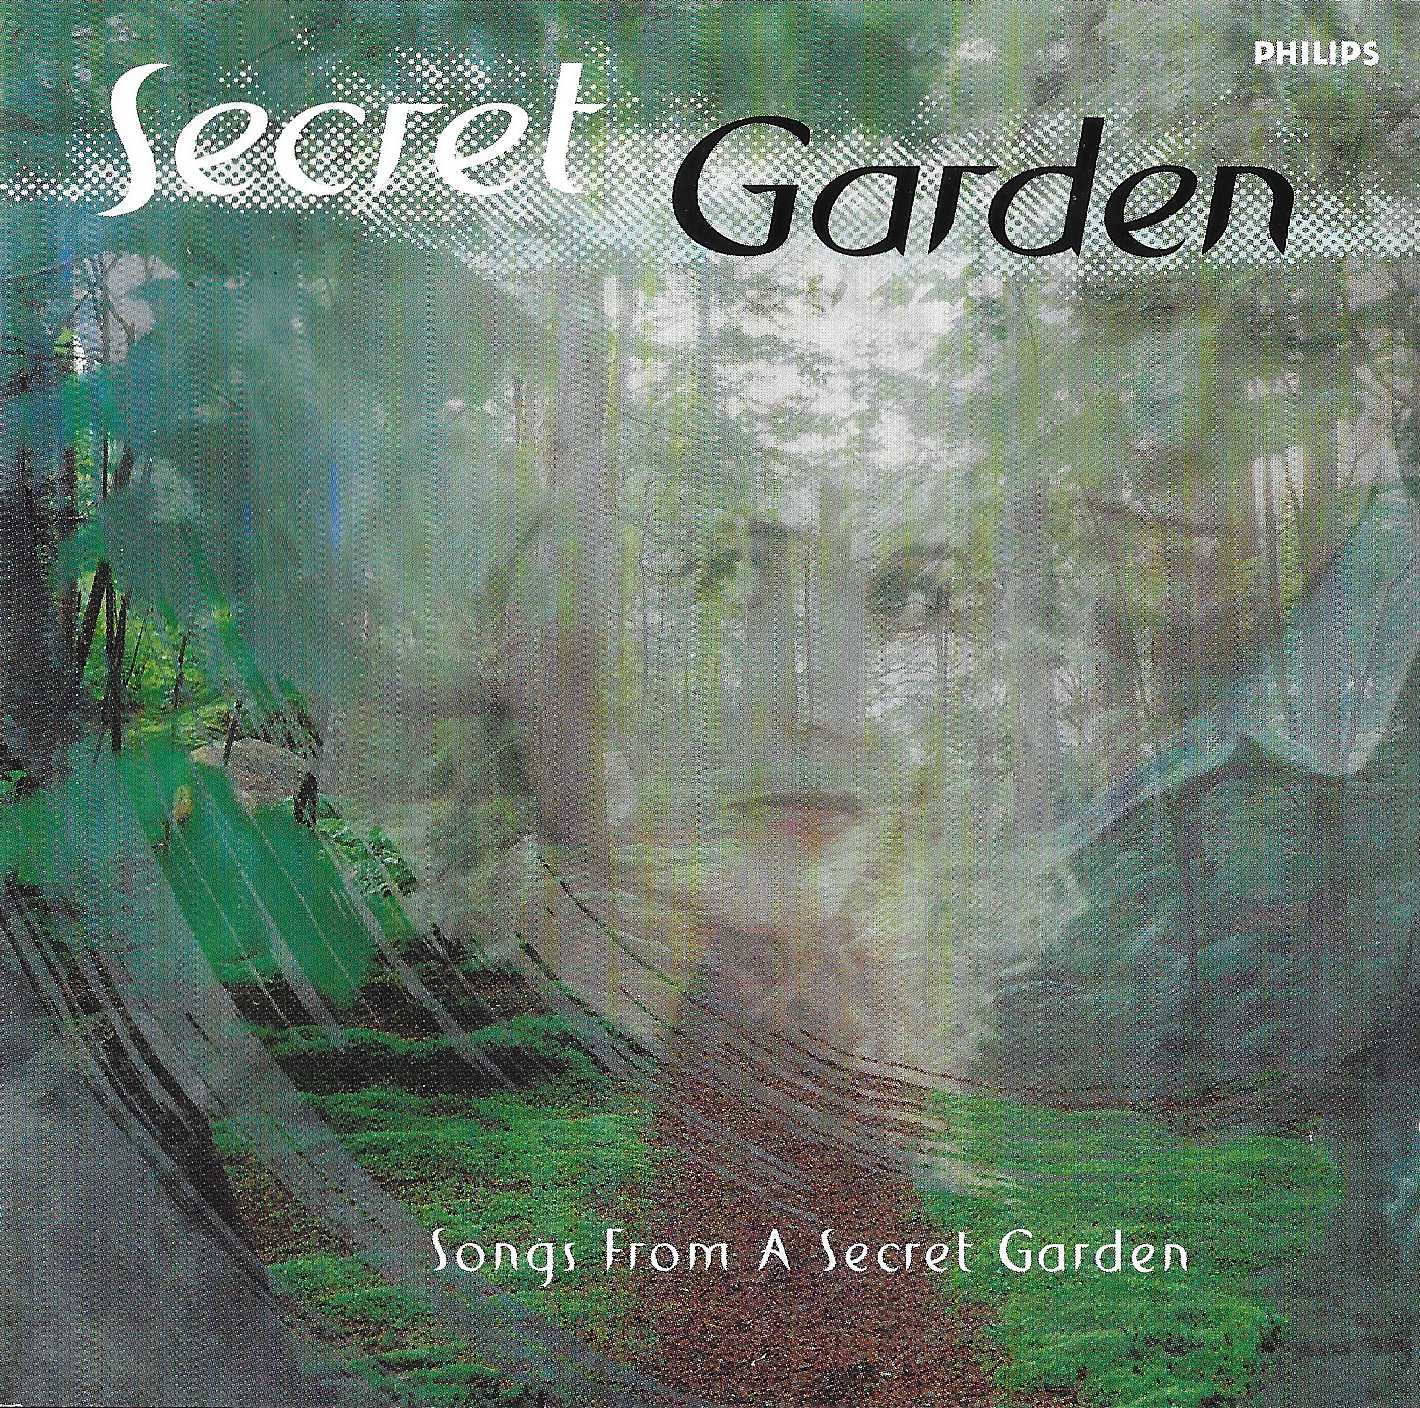 Picture of Songs from a secret garden by artist Secret Garden 